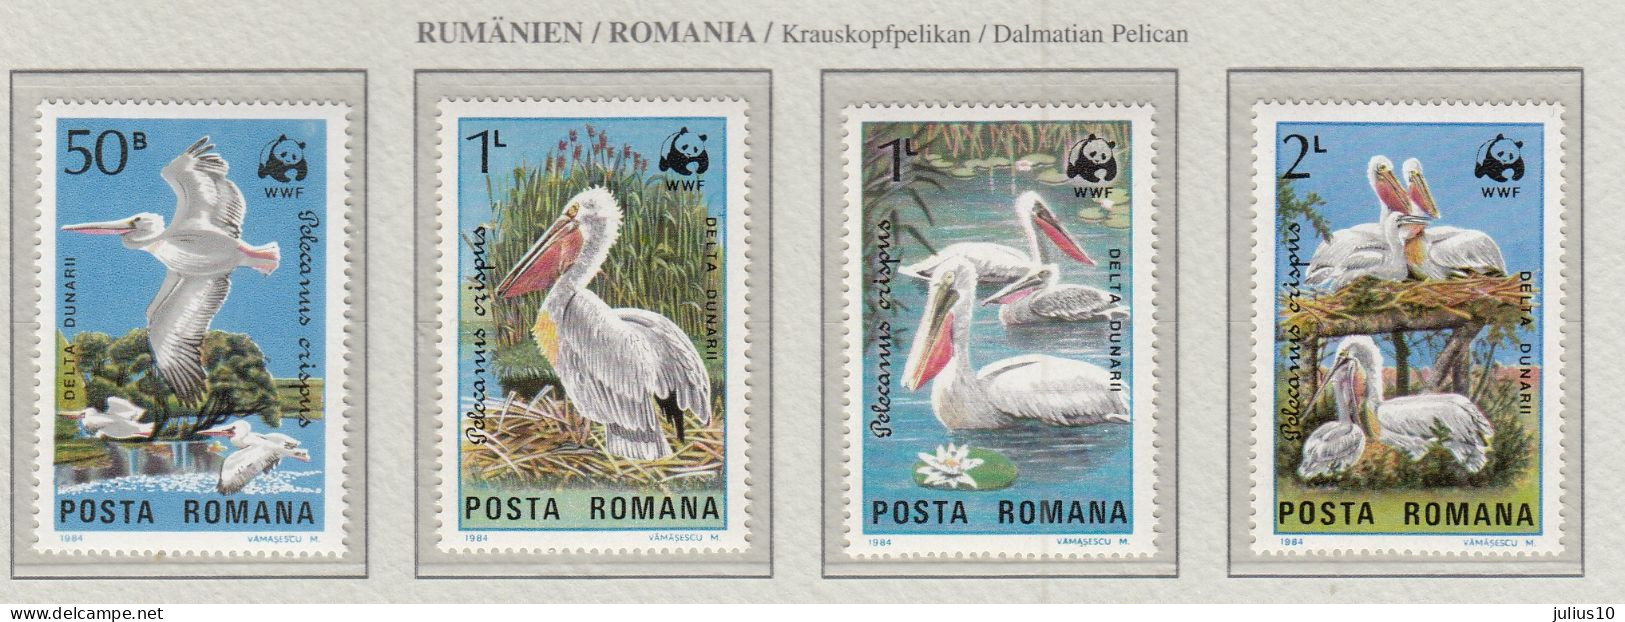 ROMANIA 1984 WWF Birds Pelicans Mi 4104-4107 MNH(**) Fauna 693 - Pelicans